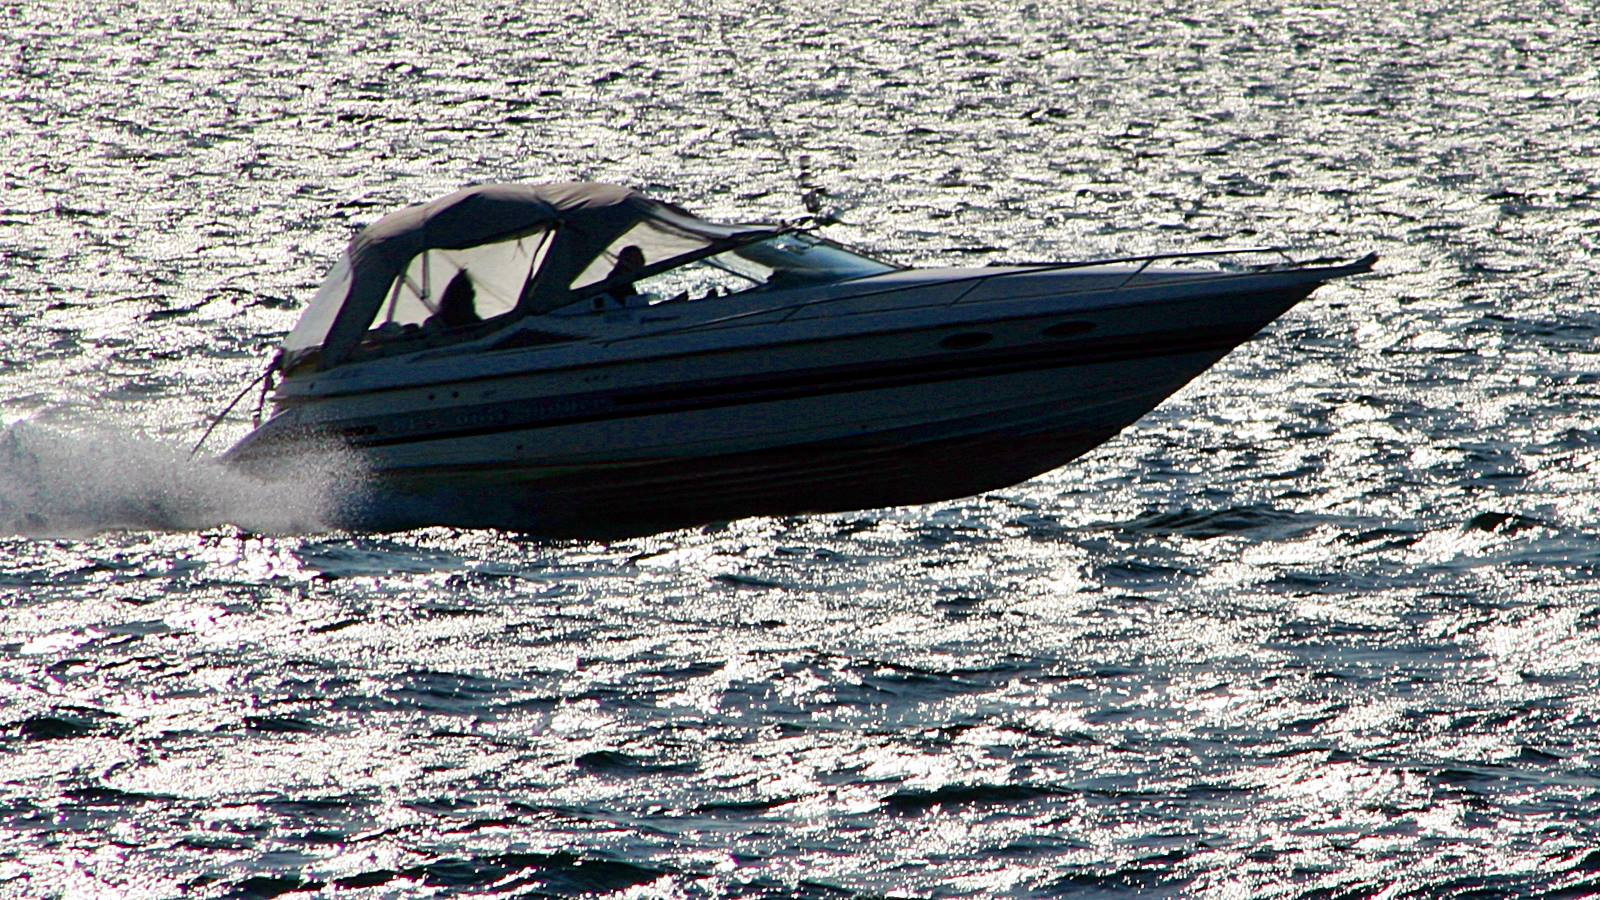 Speedbåt - Ulsnes - Byfjorden - Stavanger